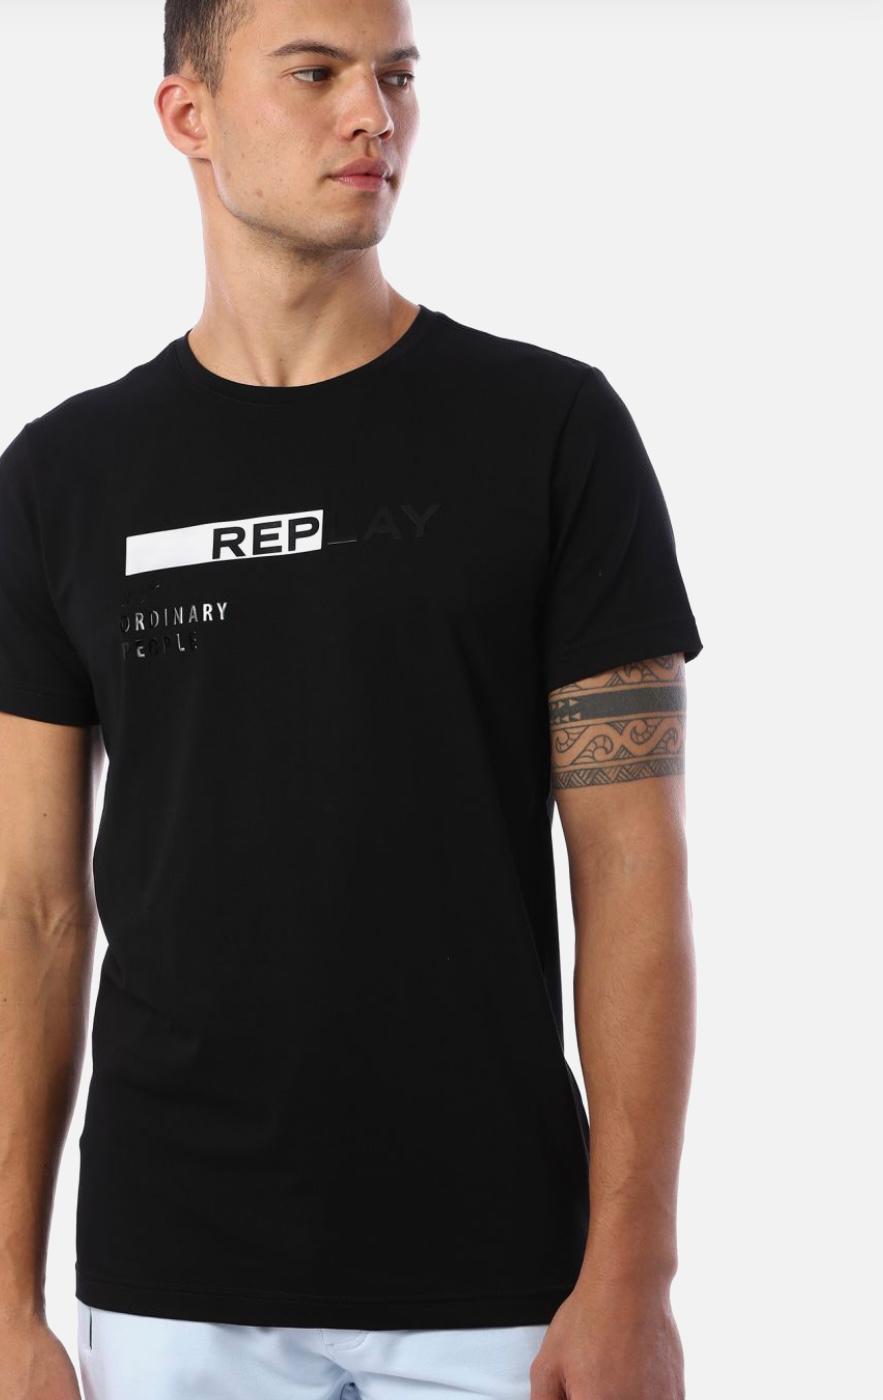 REPLAY - replay t-shirt - חנות מותגים אונליין לבגדי מותגים בחדרה - הכי בעיר